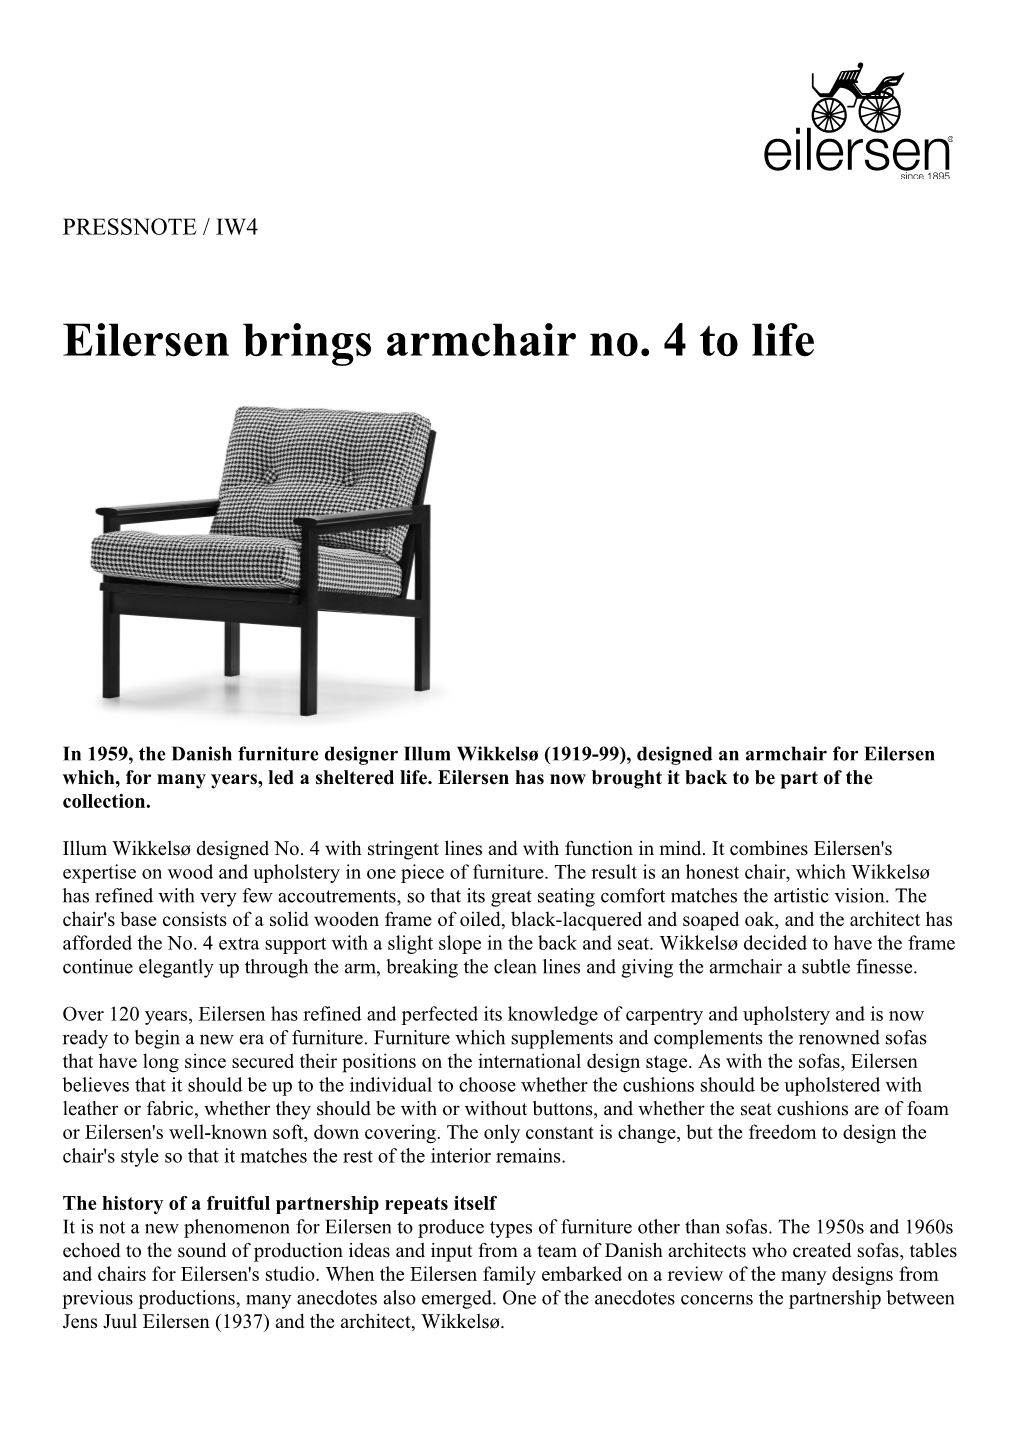 Eilersen Bringsarmchair No. 4 to Life